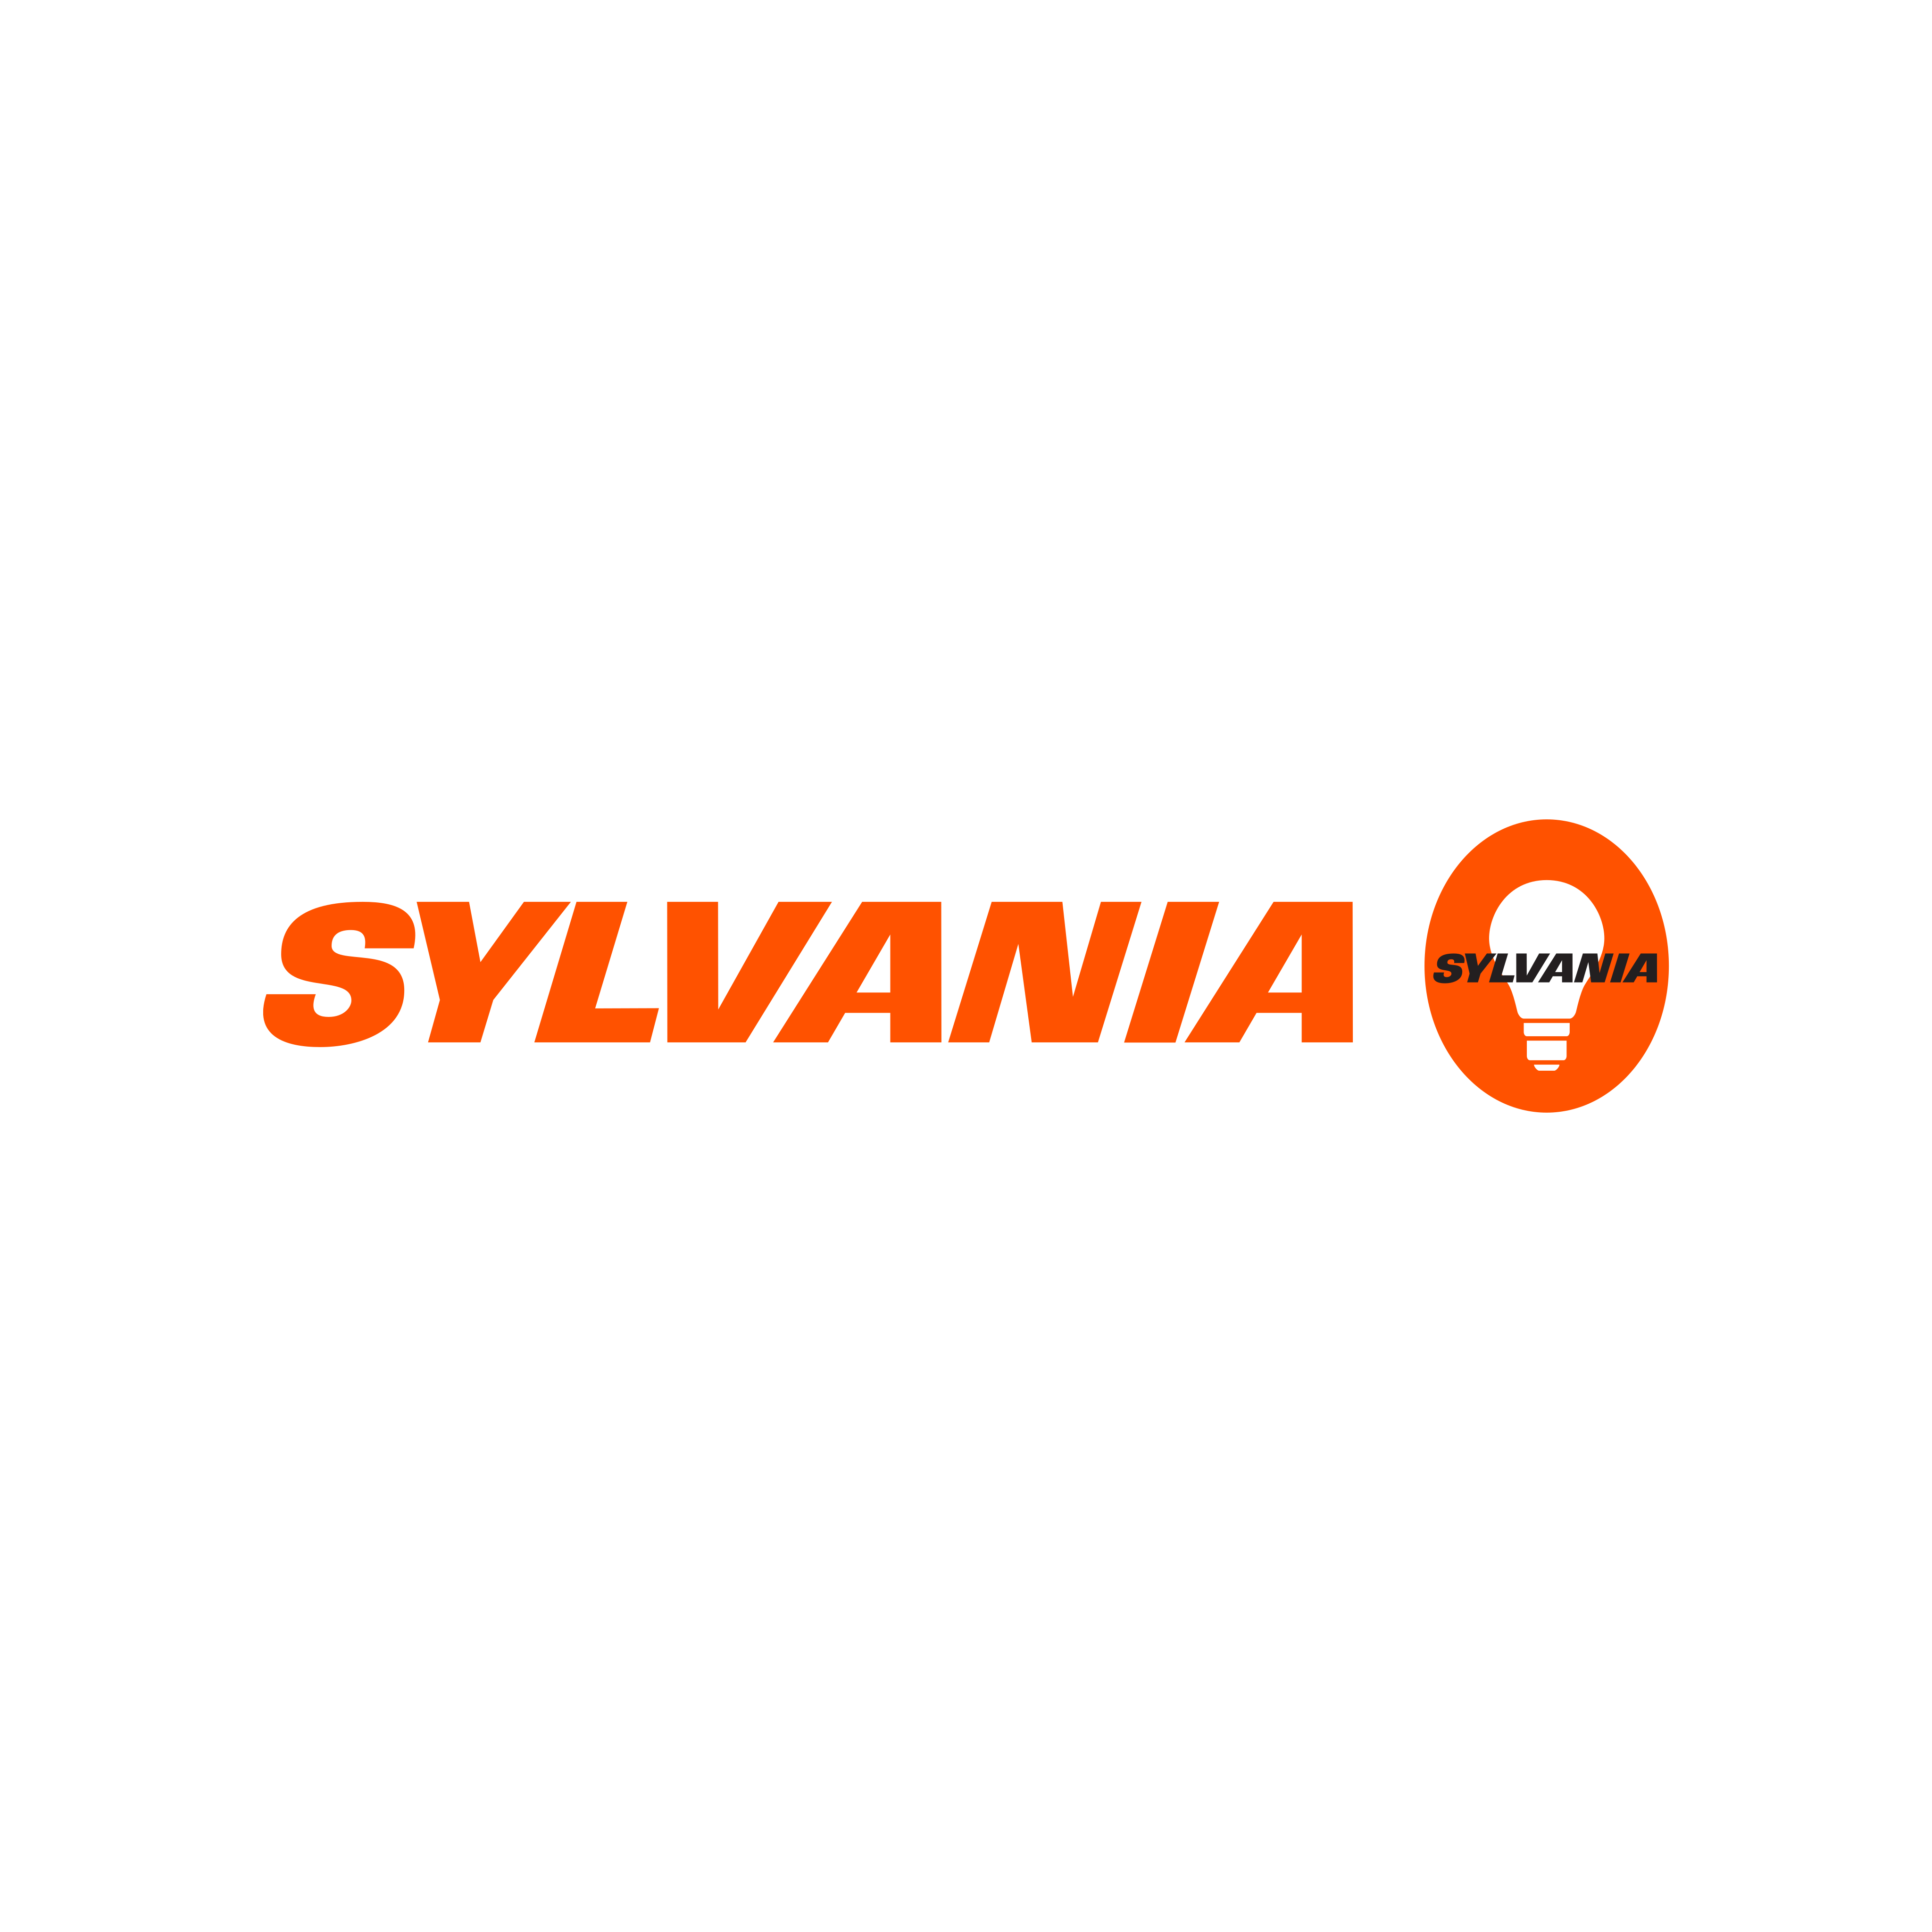 sylvania logo 0 - Sylvania Lighting Logo